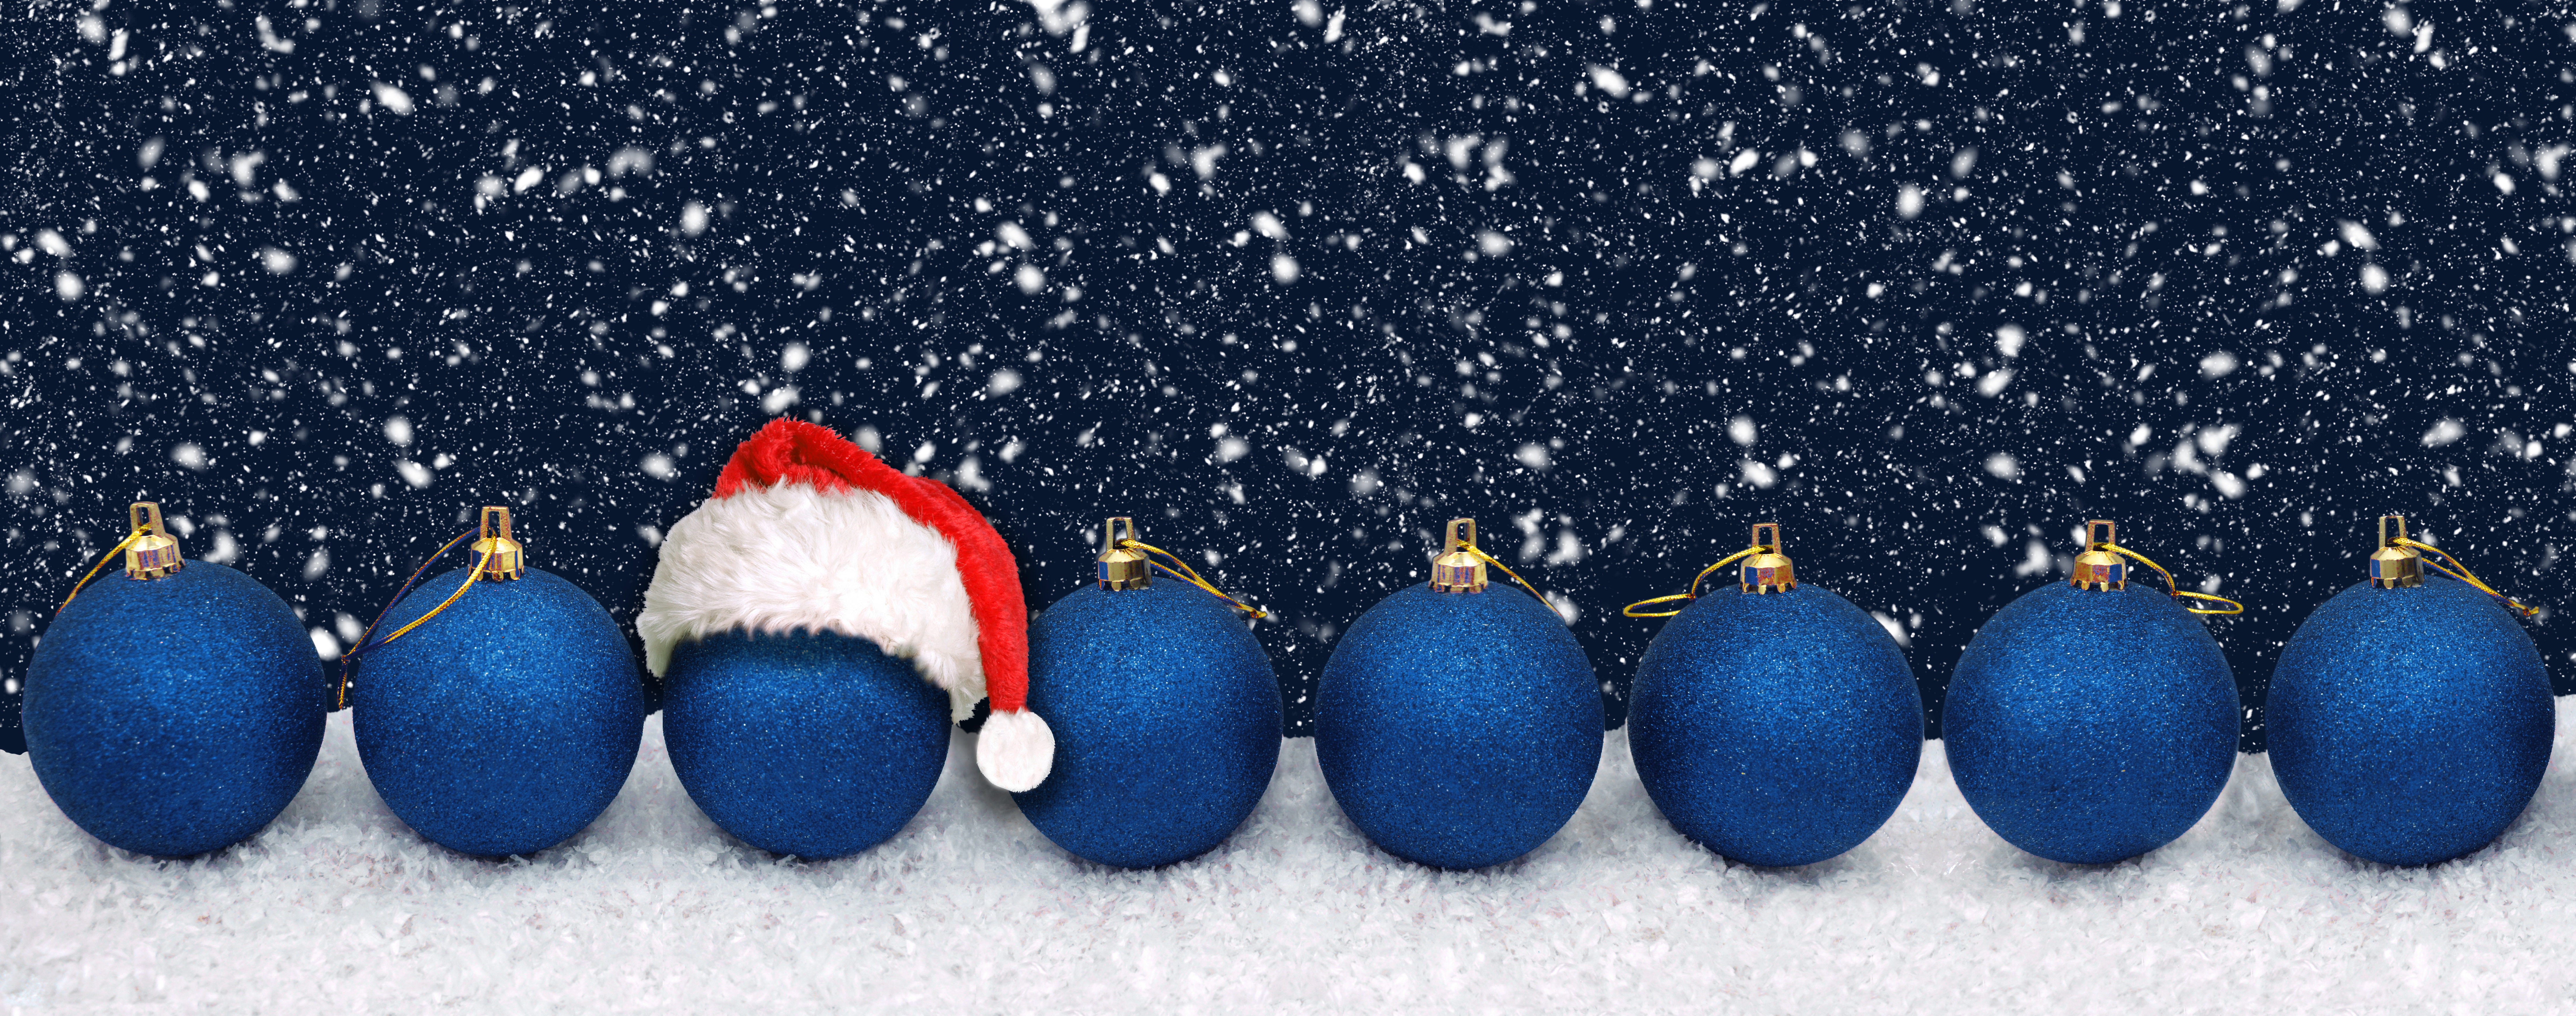 Bauble Christmas Ornaments Santa Hat Snowfall 8821x3479